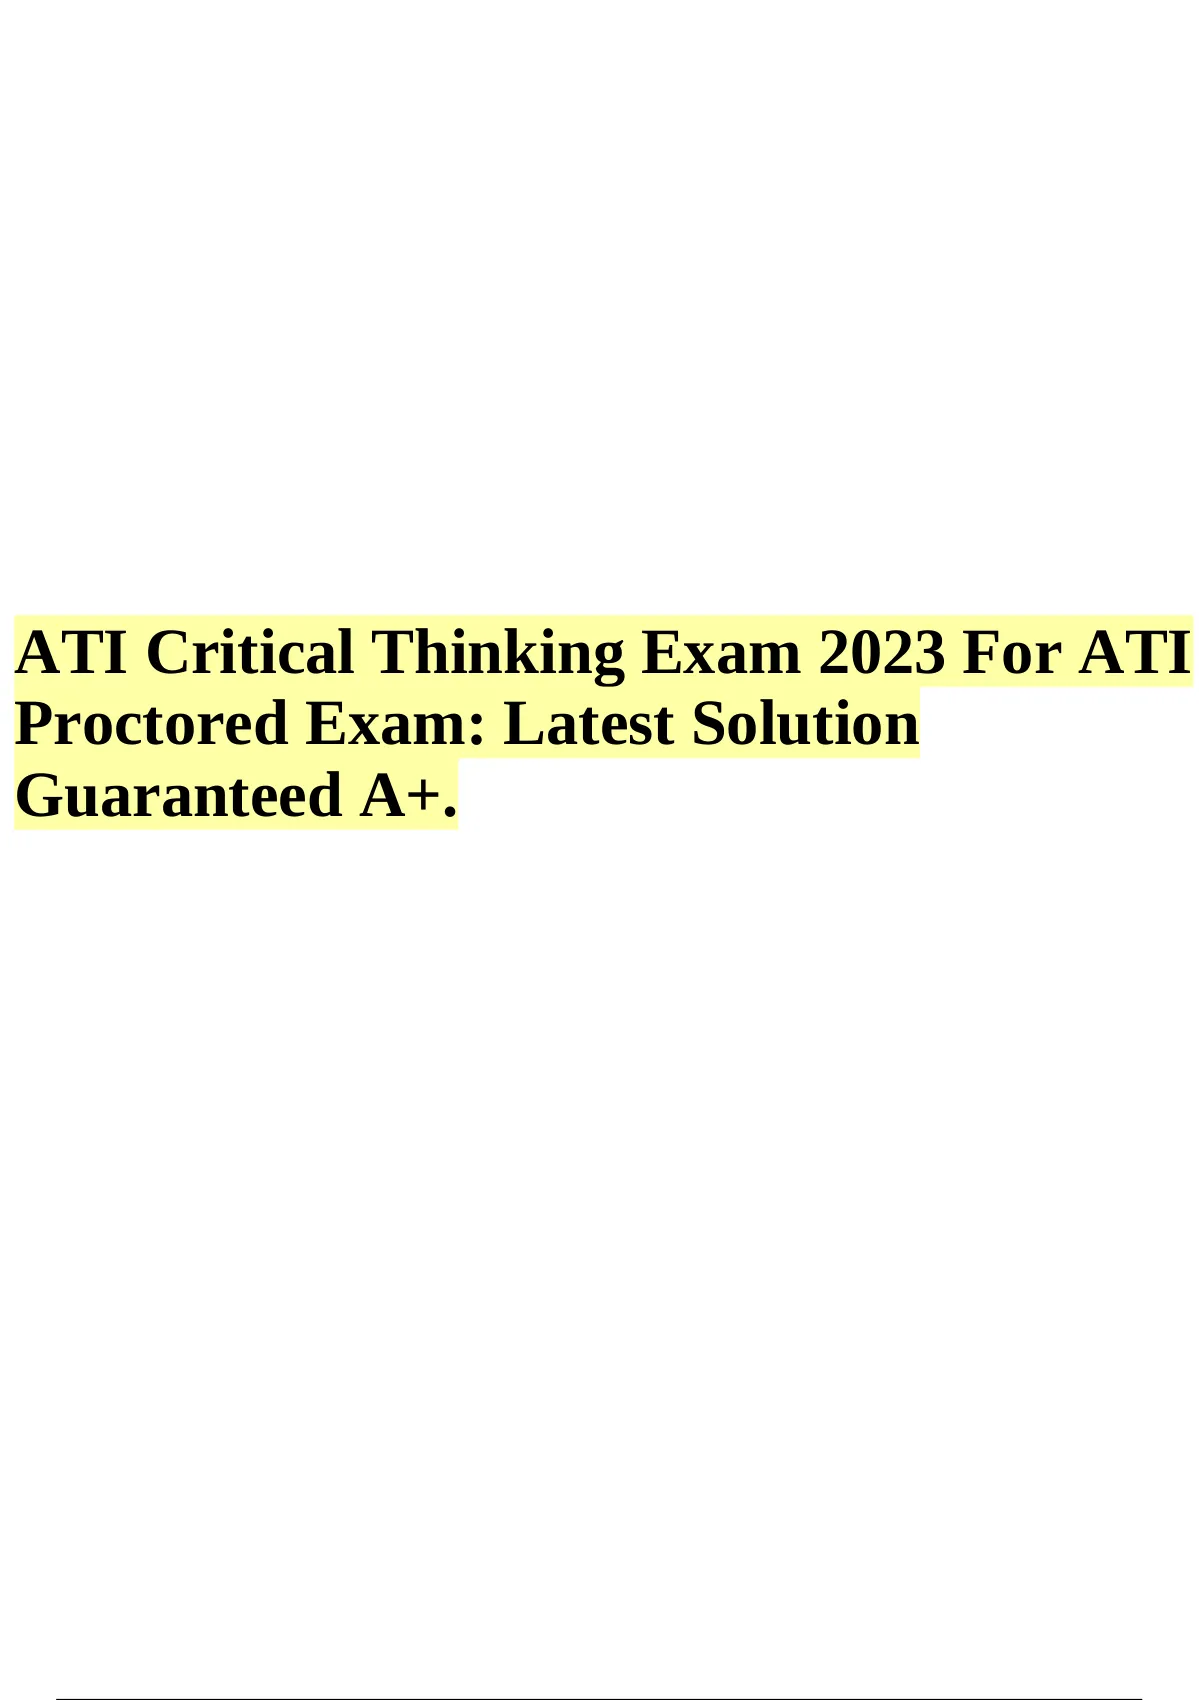 Ati critical thinking entrance exam